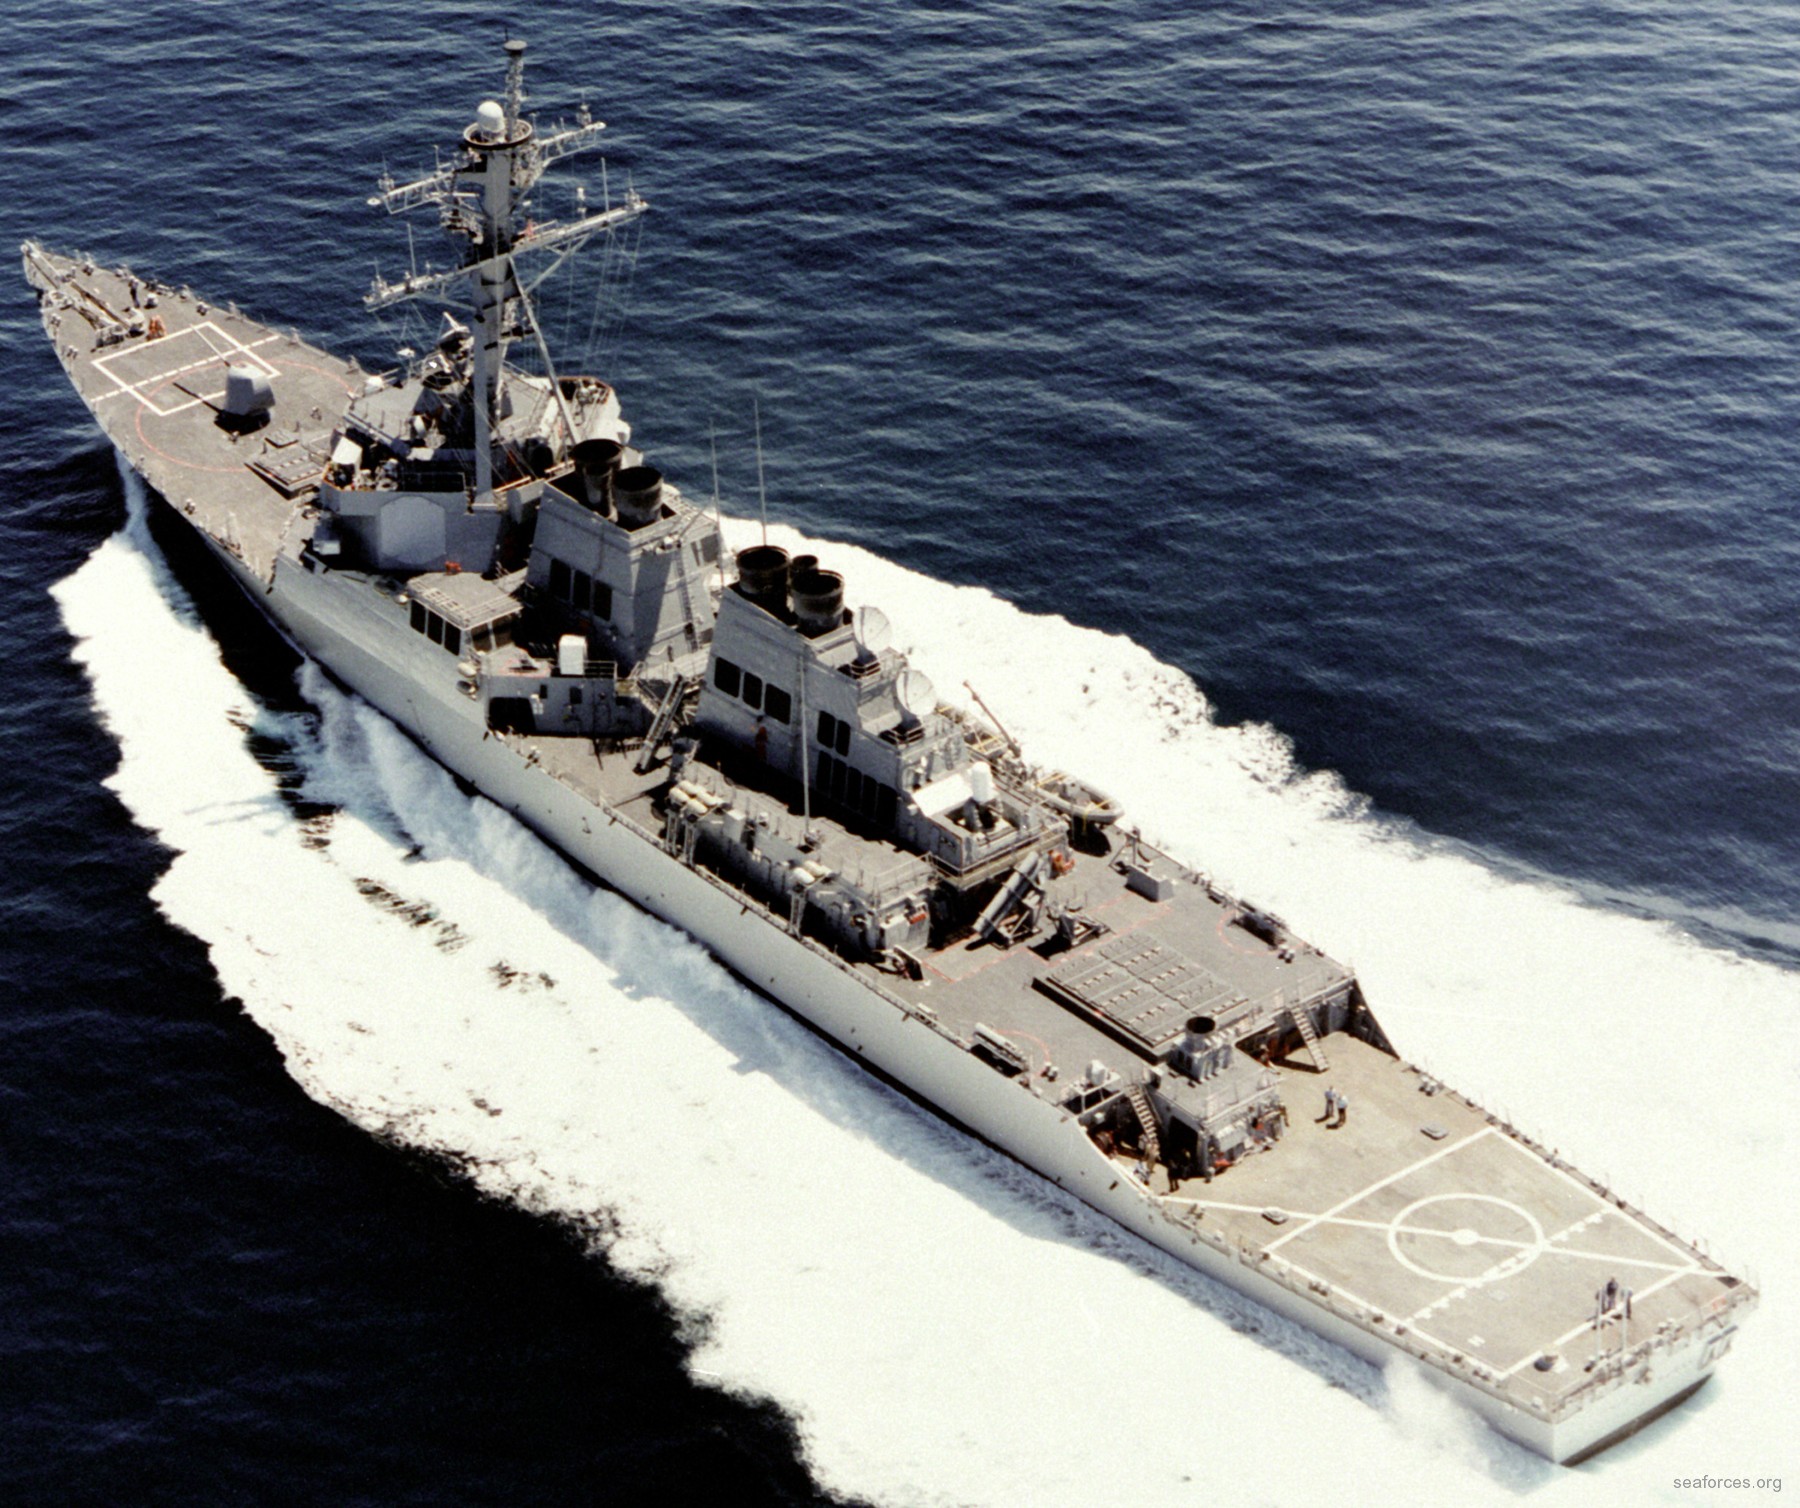 ddg-51 uss arleigh burke destroyer us navy 67